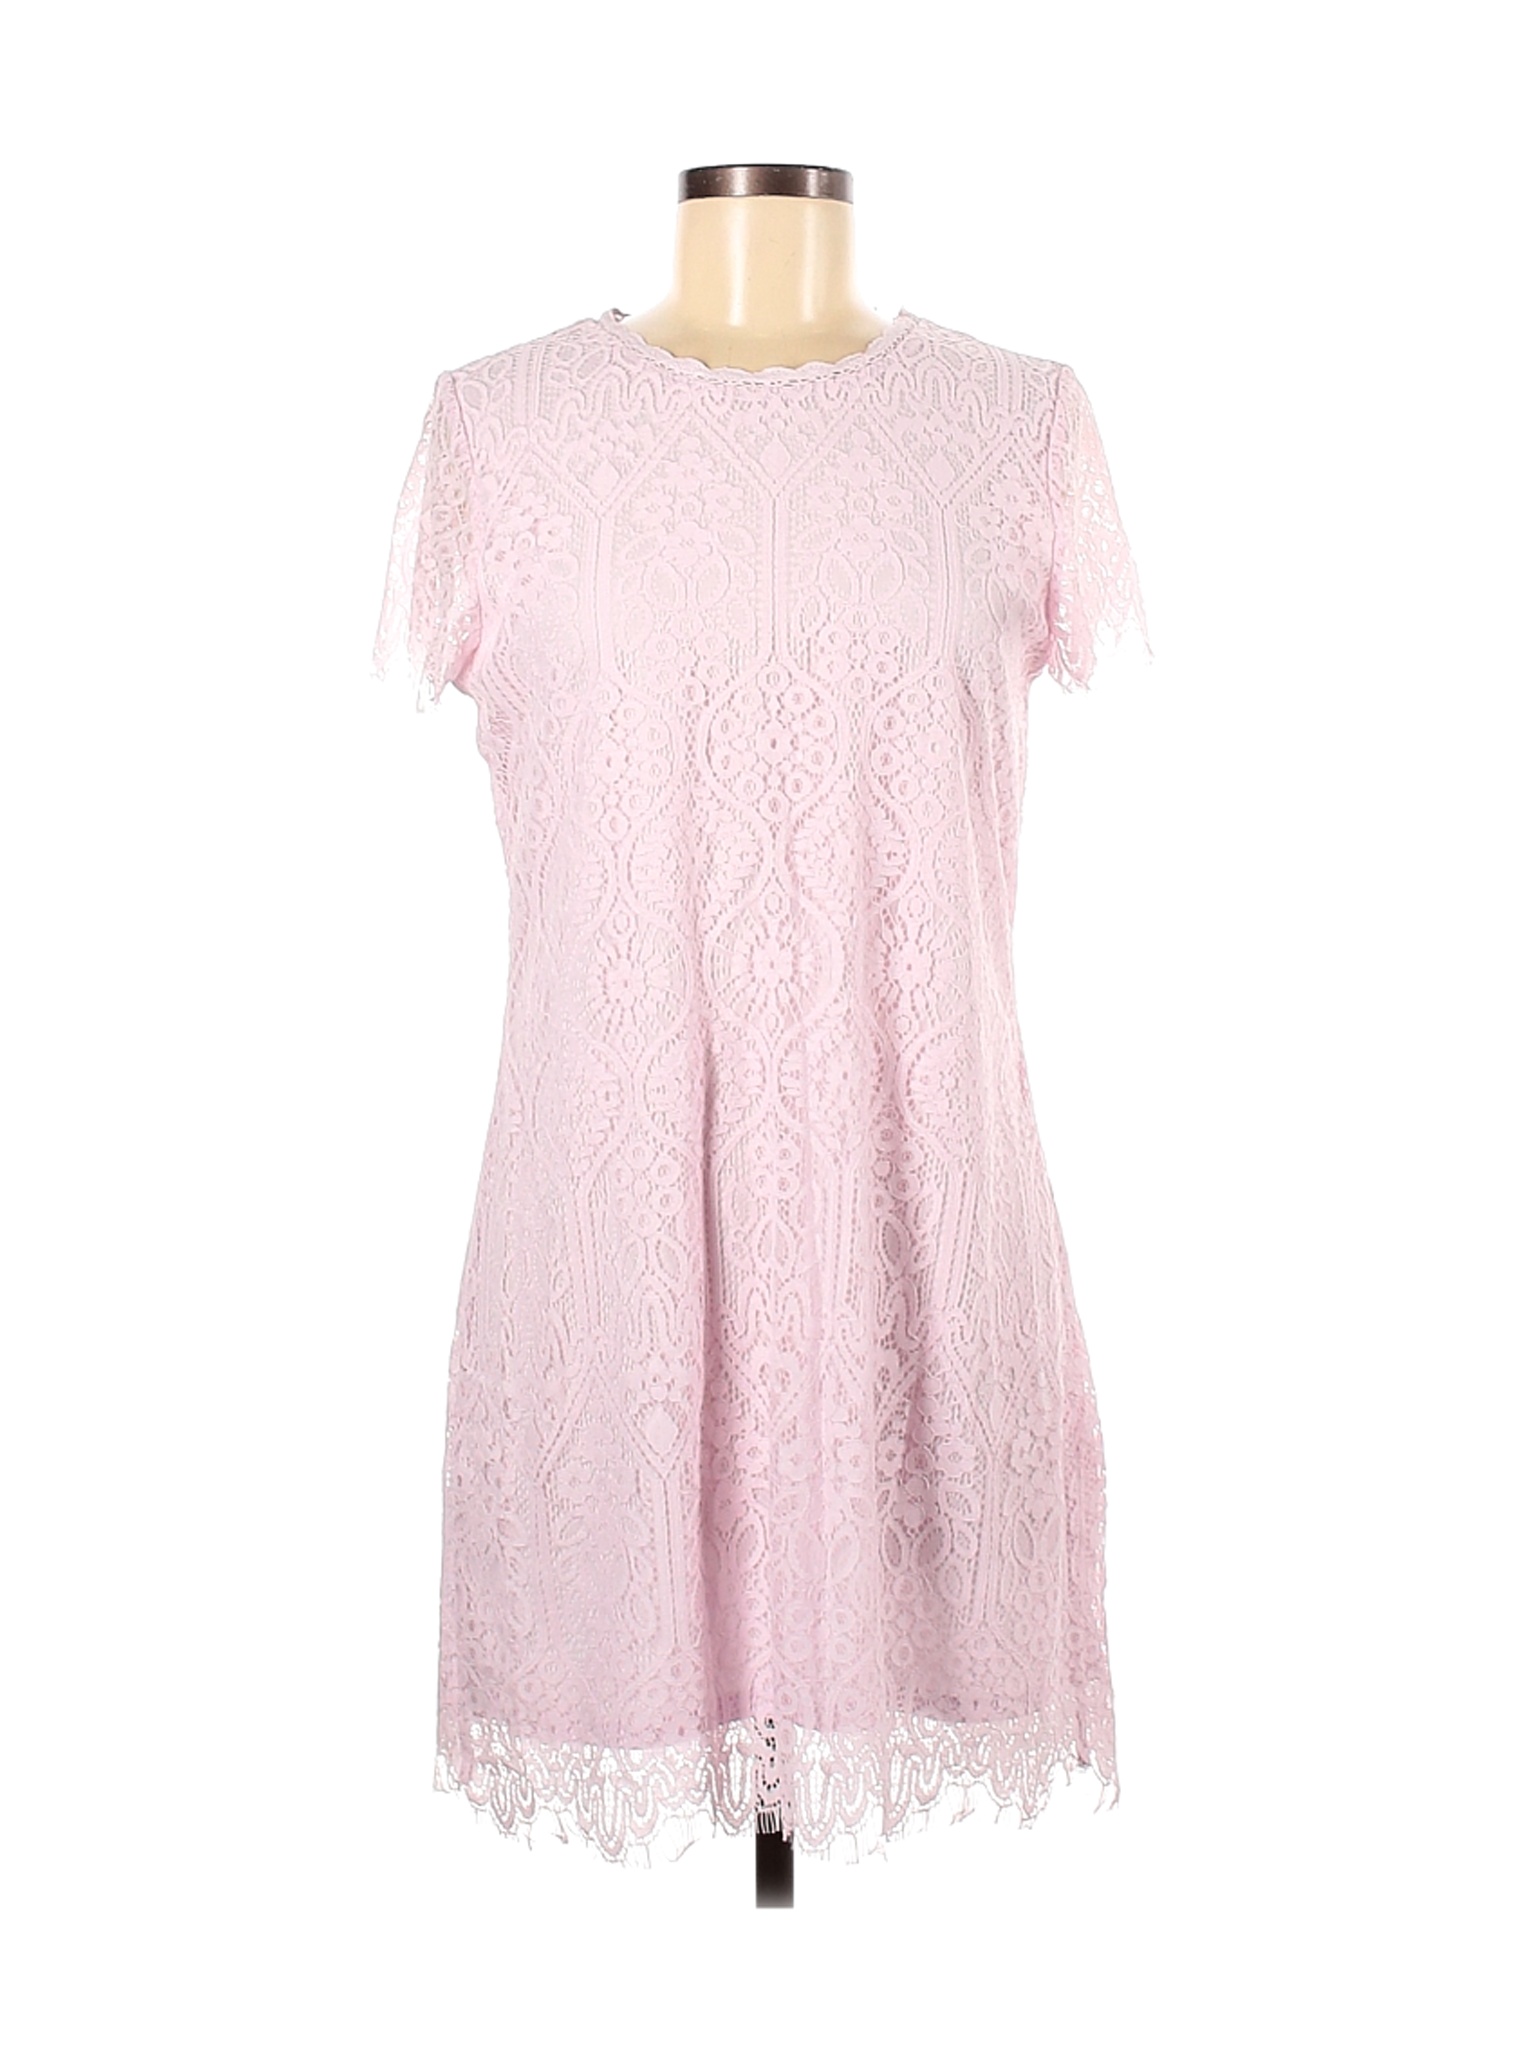 Mi ami Solid Pink Casual Dress Size M - 60% off | thredUP